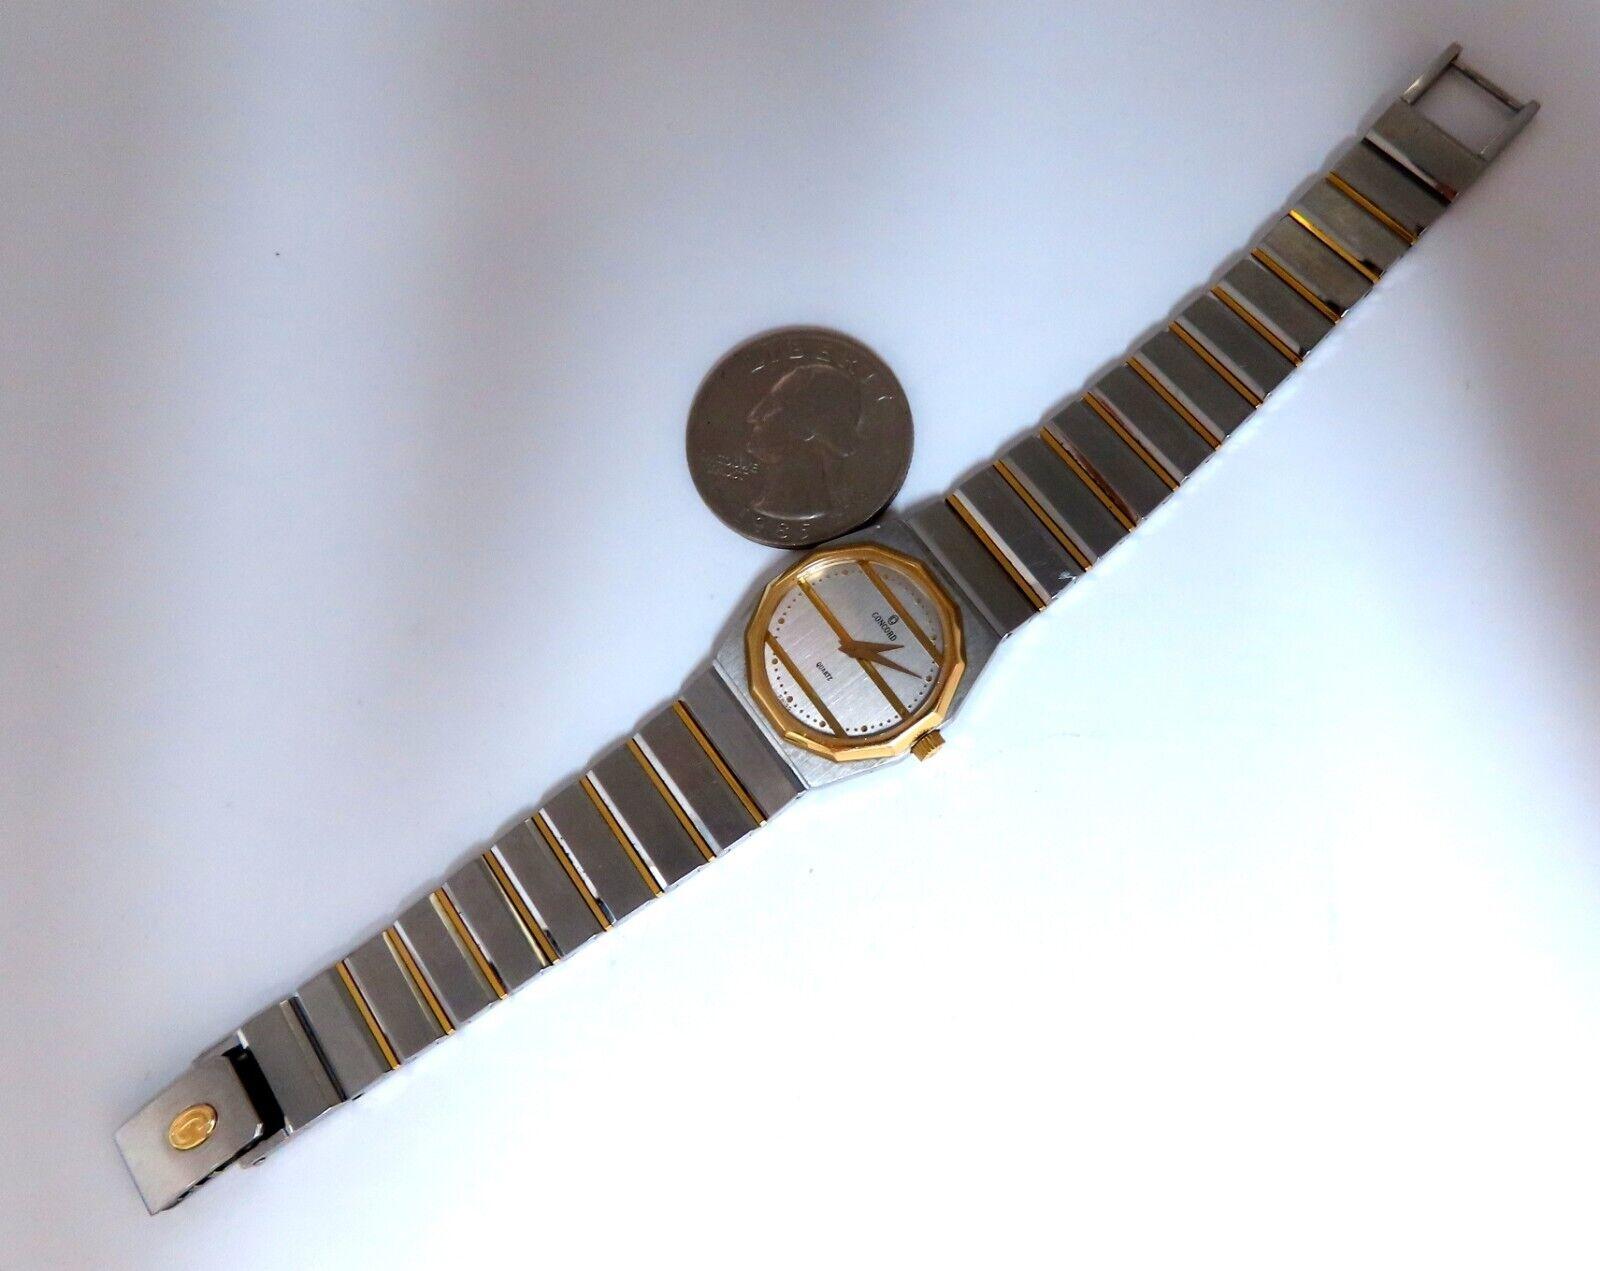 Concord quartz.

6.5 inch bracelet.

22mm dial

Fair condition.

Working order.